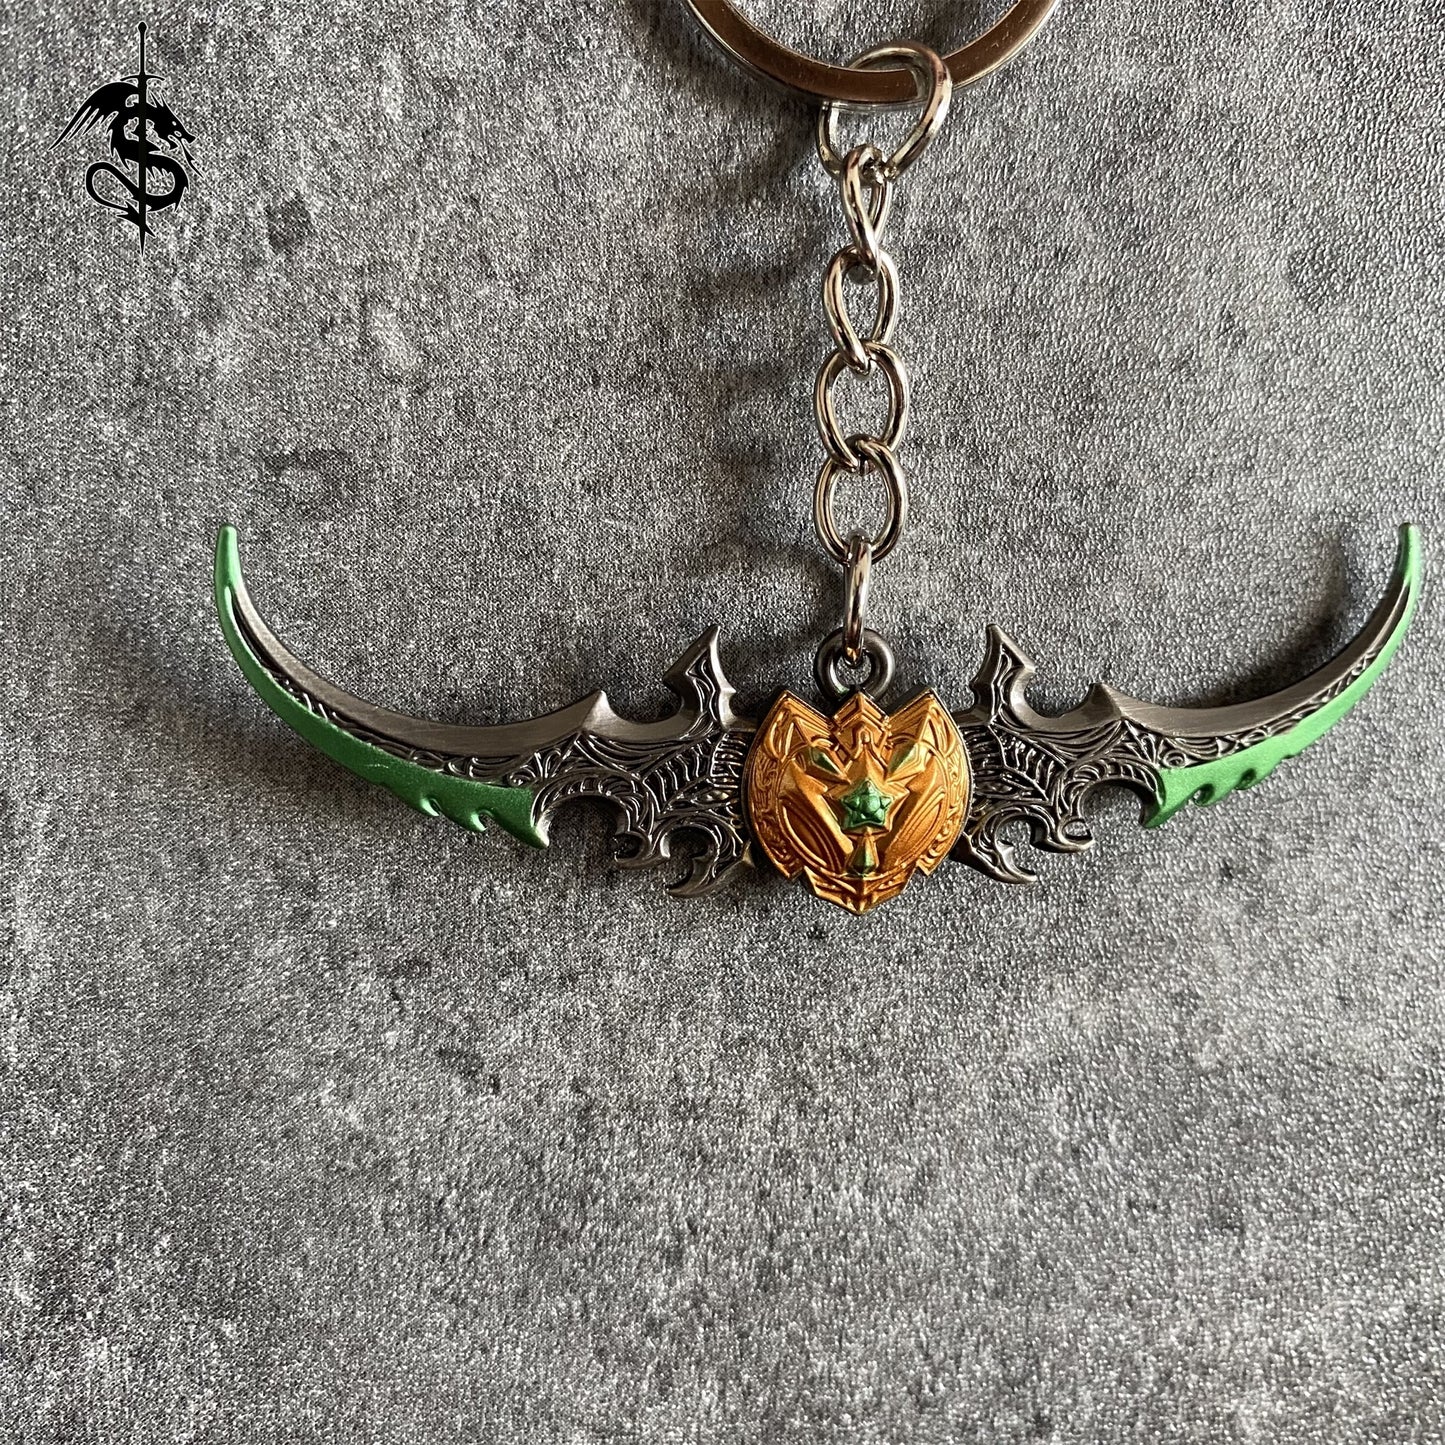 WOW Illidans Glaives Demon Hunter Sword Keychain Pendant